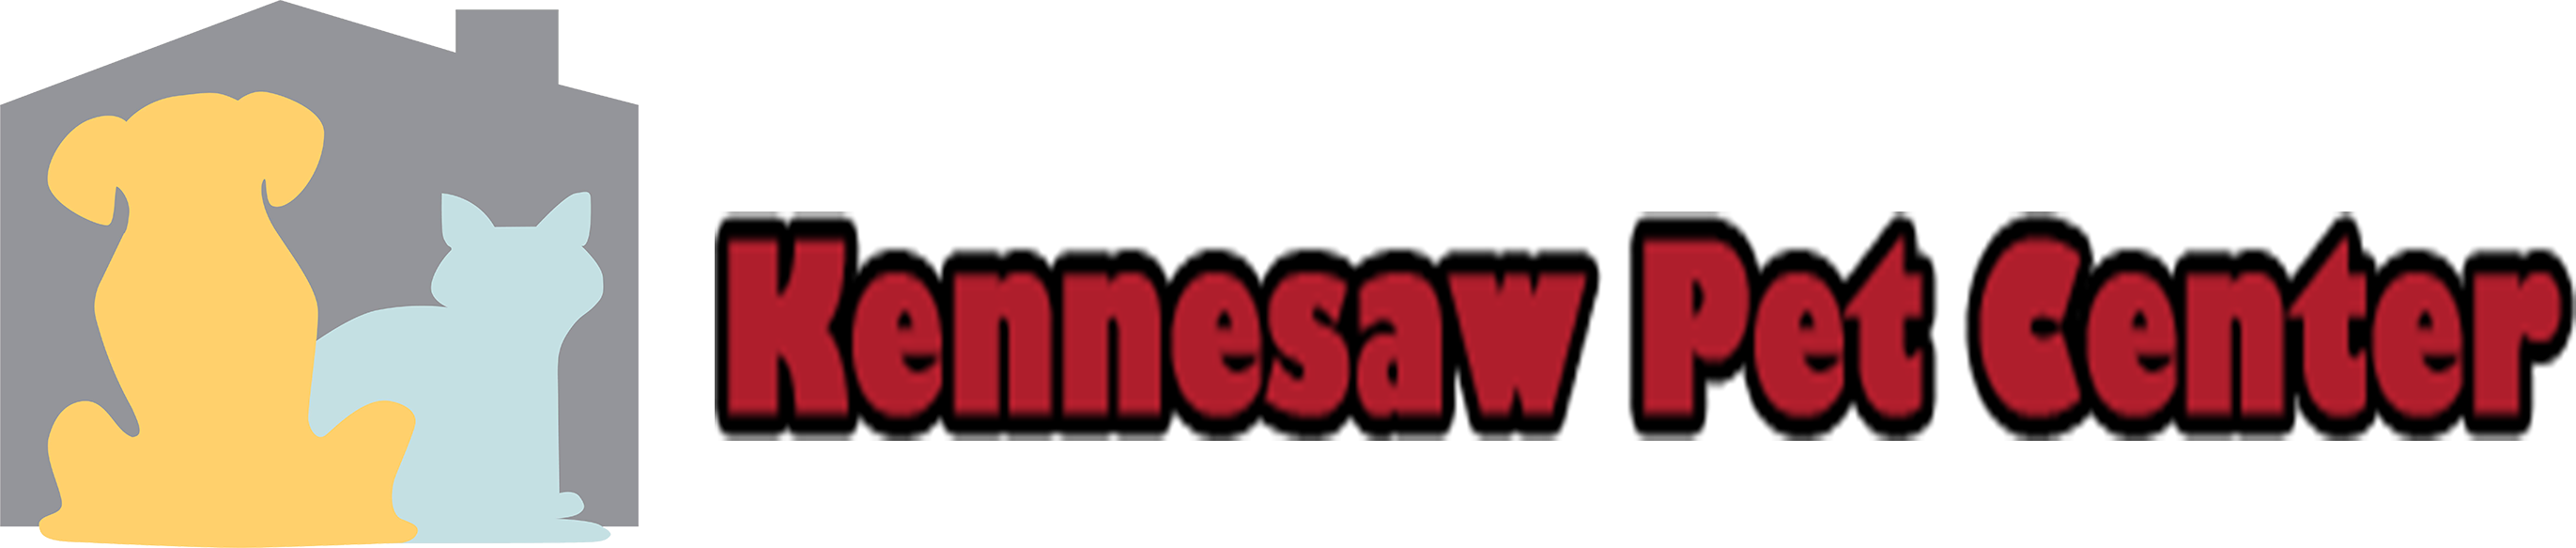 Kennesaw Pet Center logo